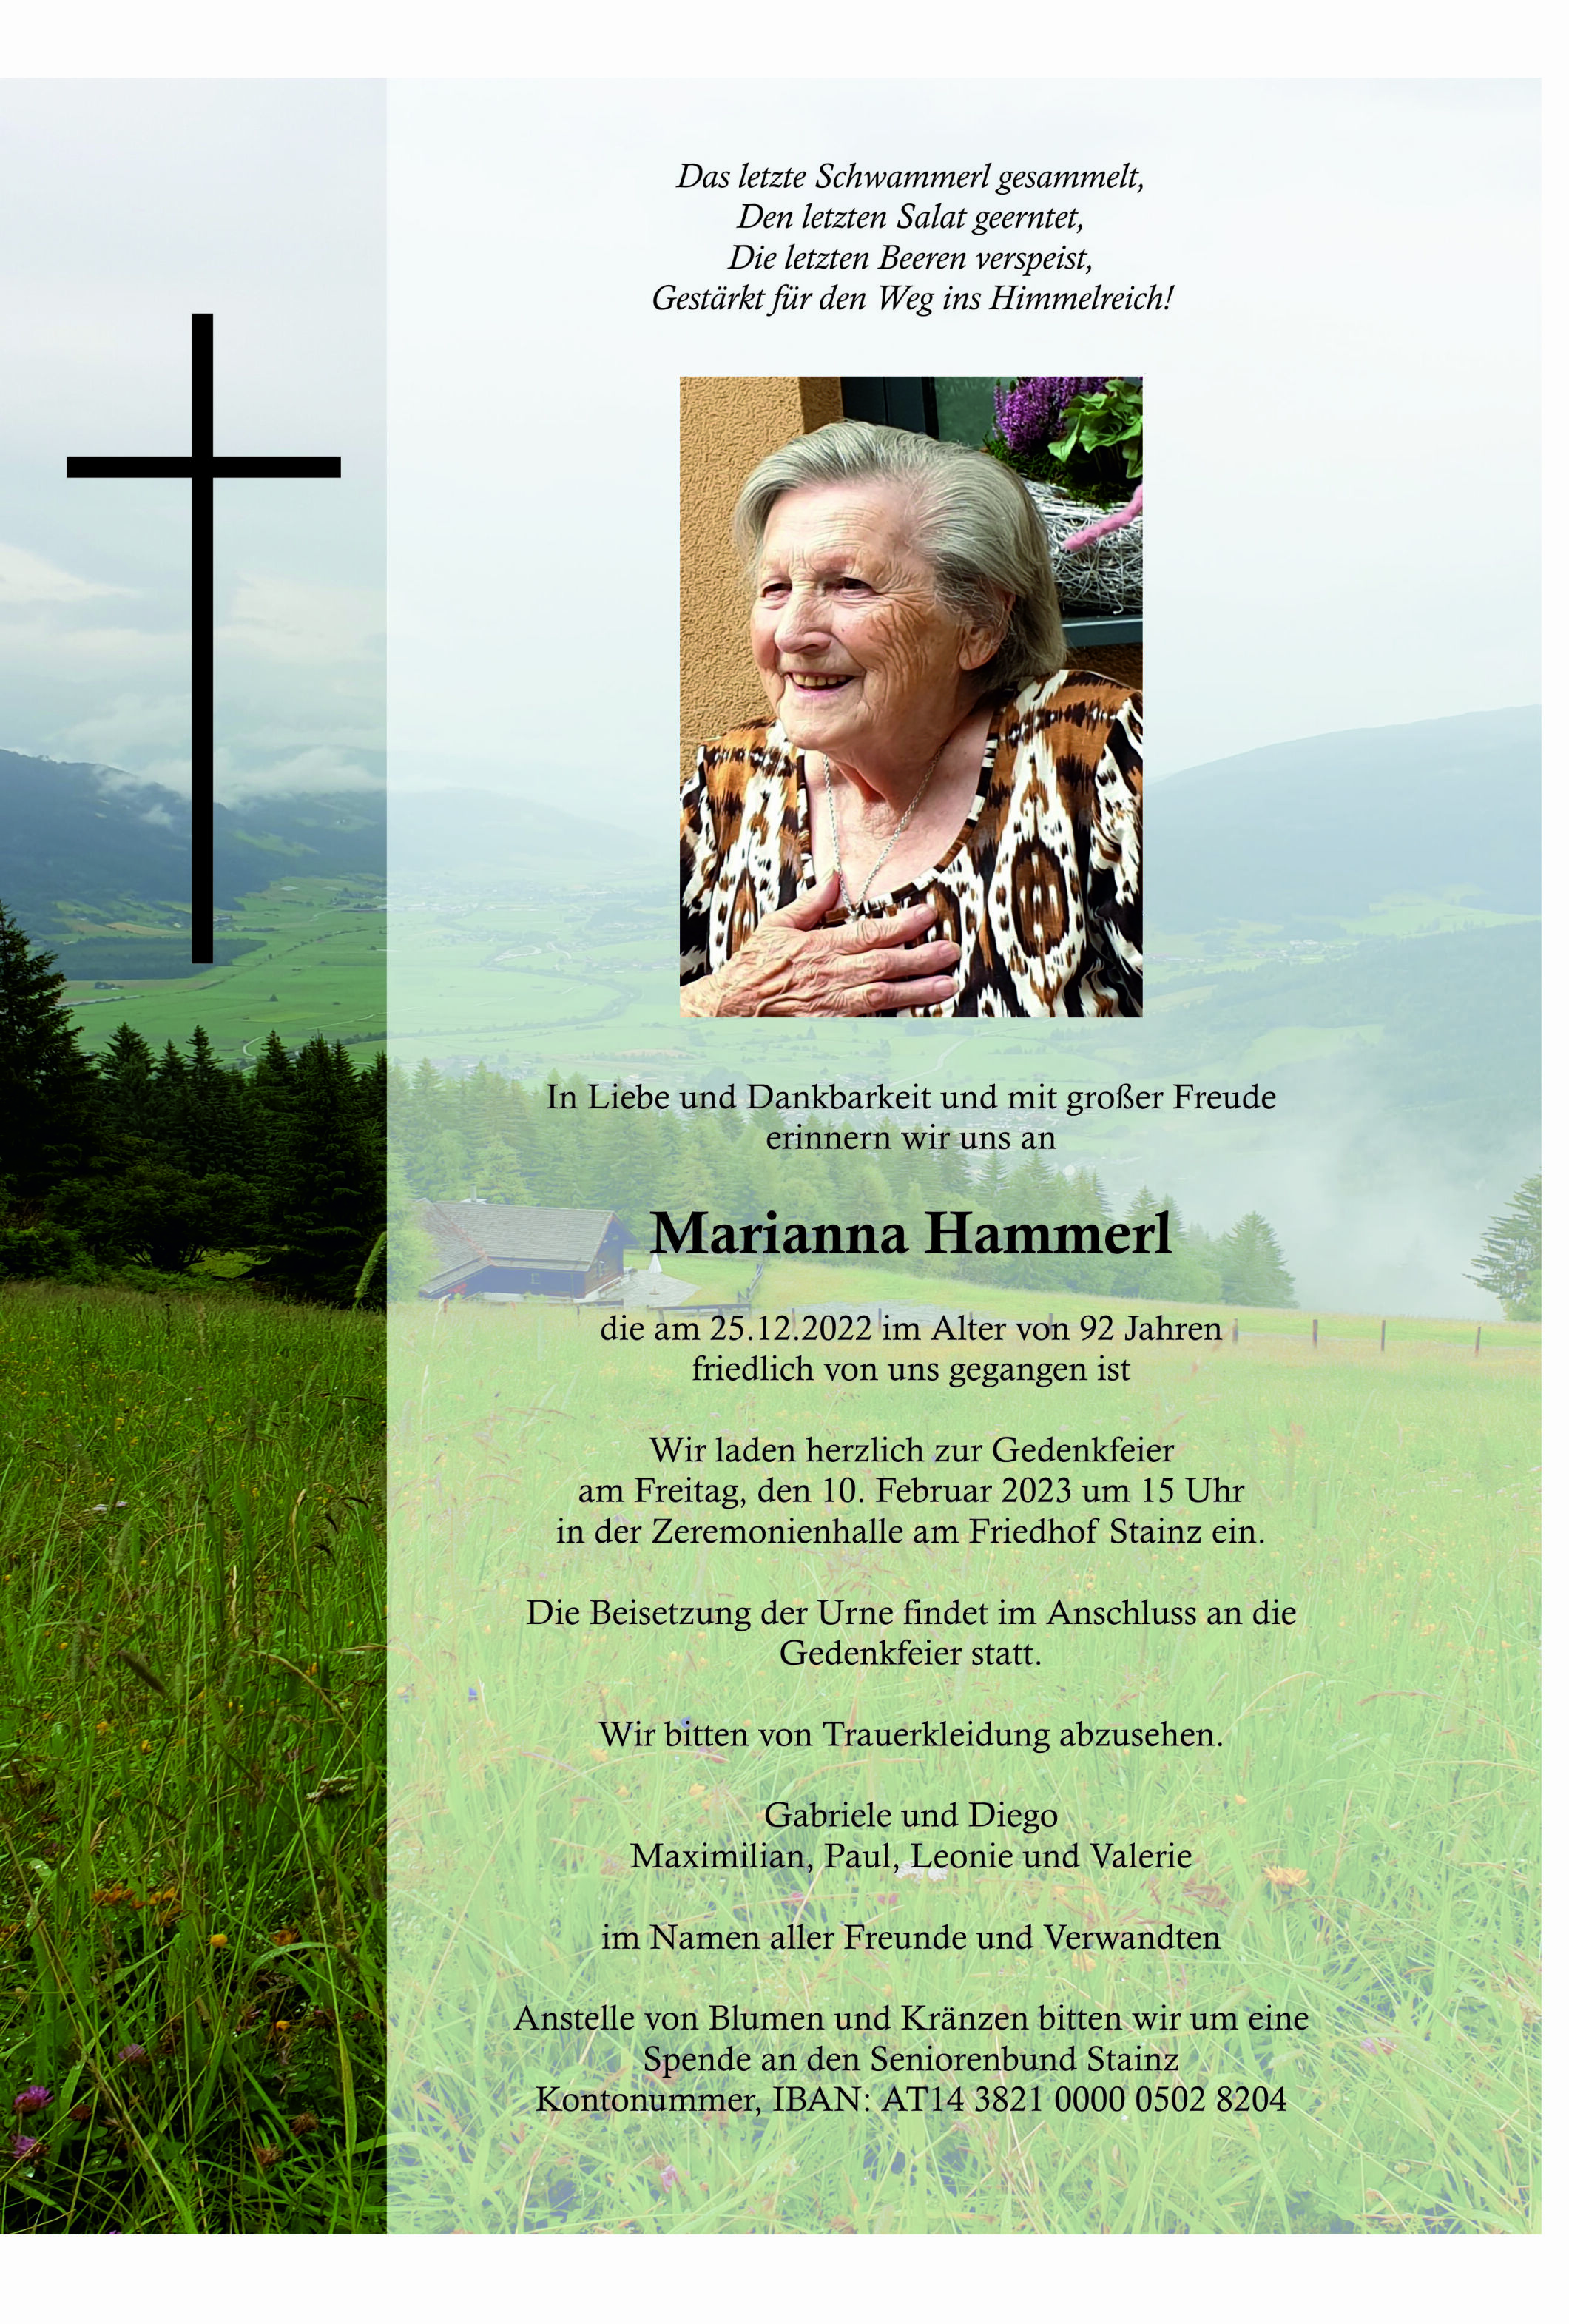 Marianna Hammerl